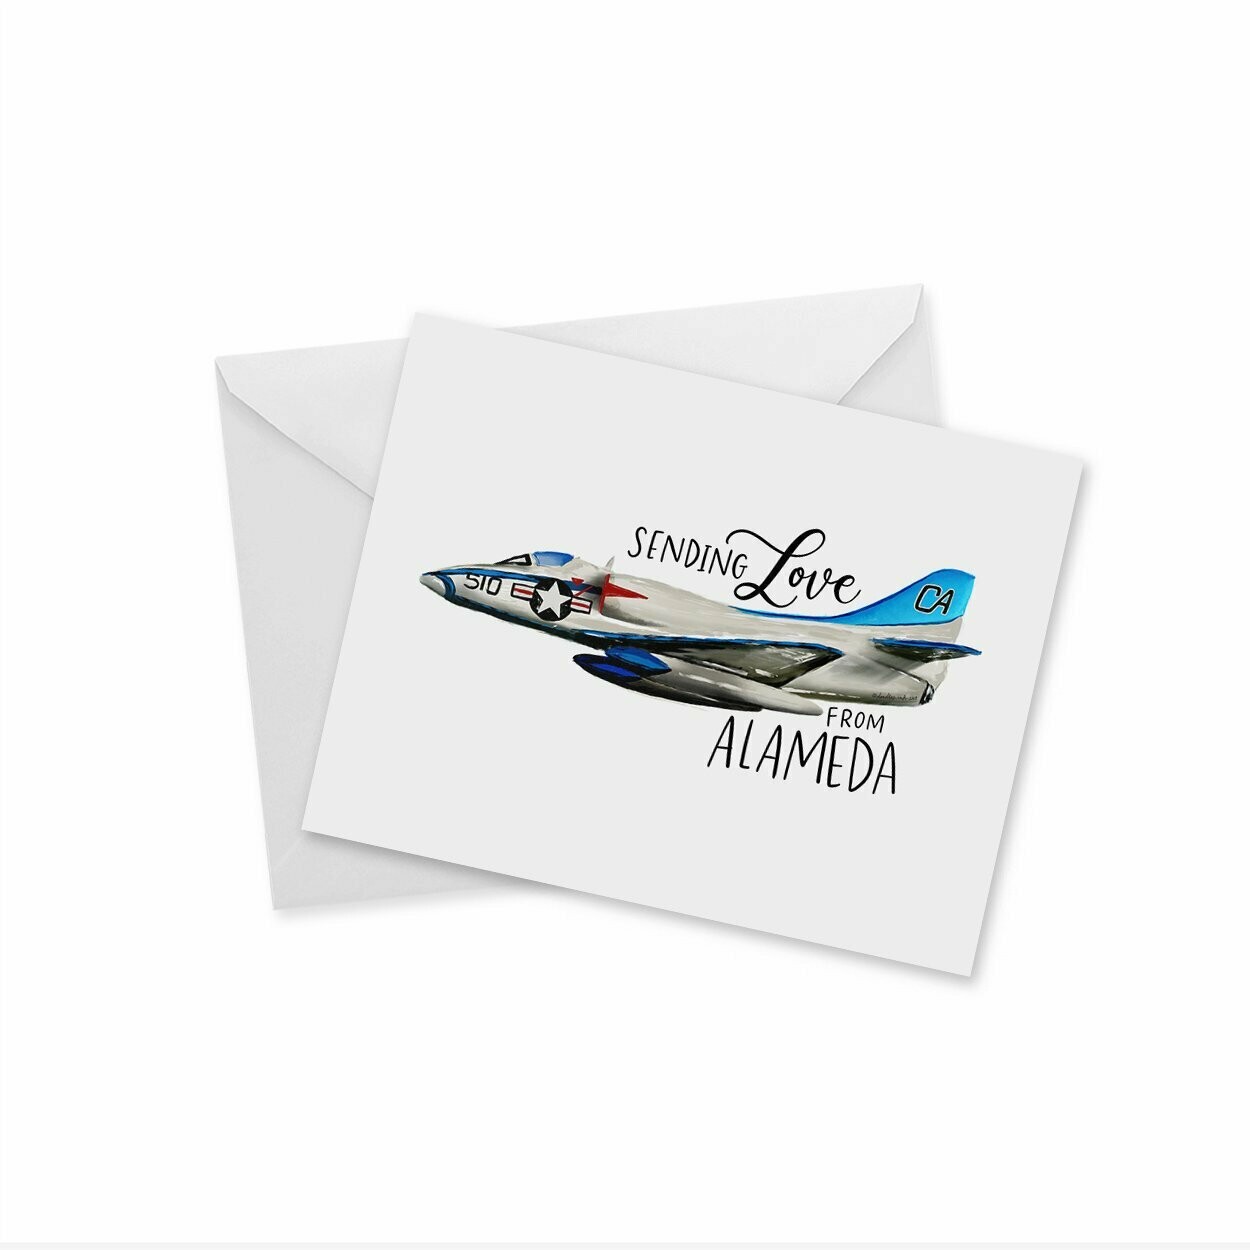 Sending Love From Alameda Card